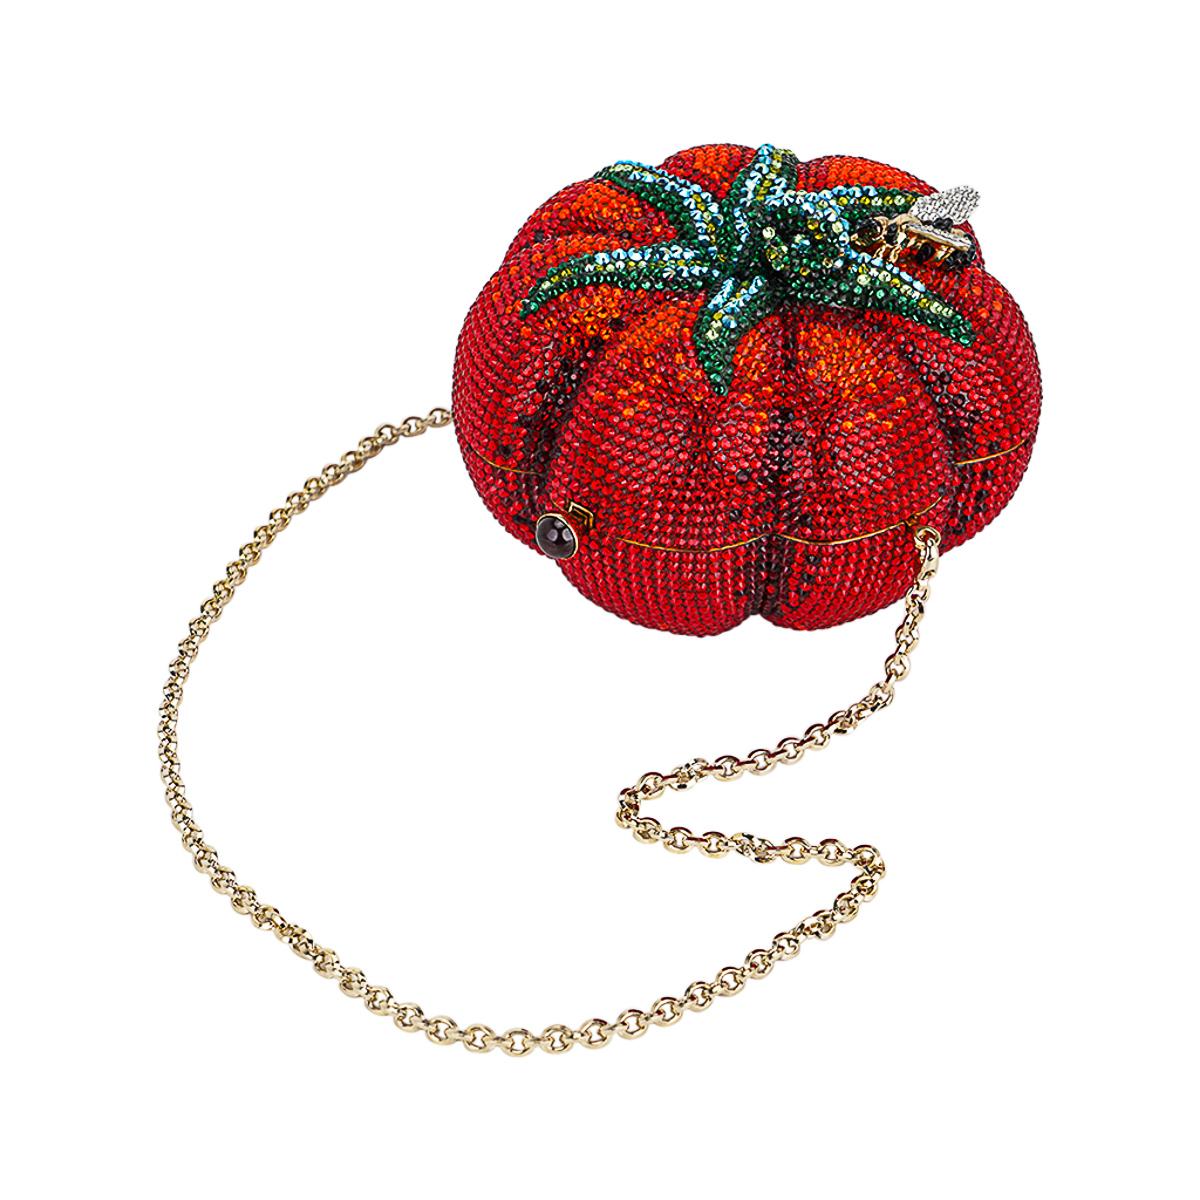 Judith Lieber Tomato Heirloom Minaudiere Limited Edition Bag 2